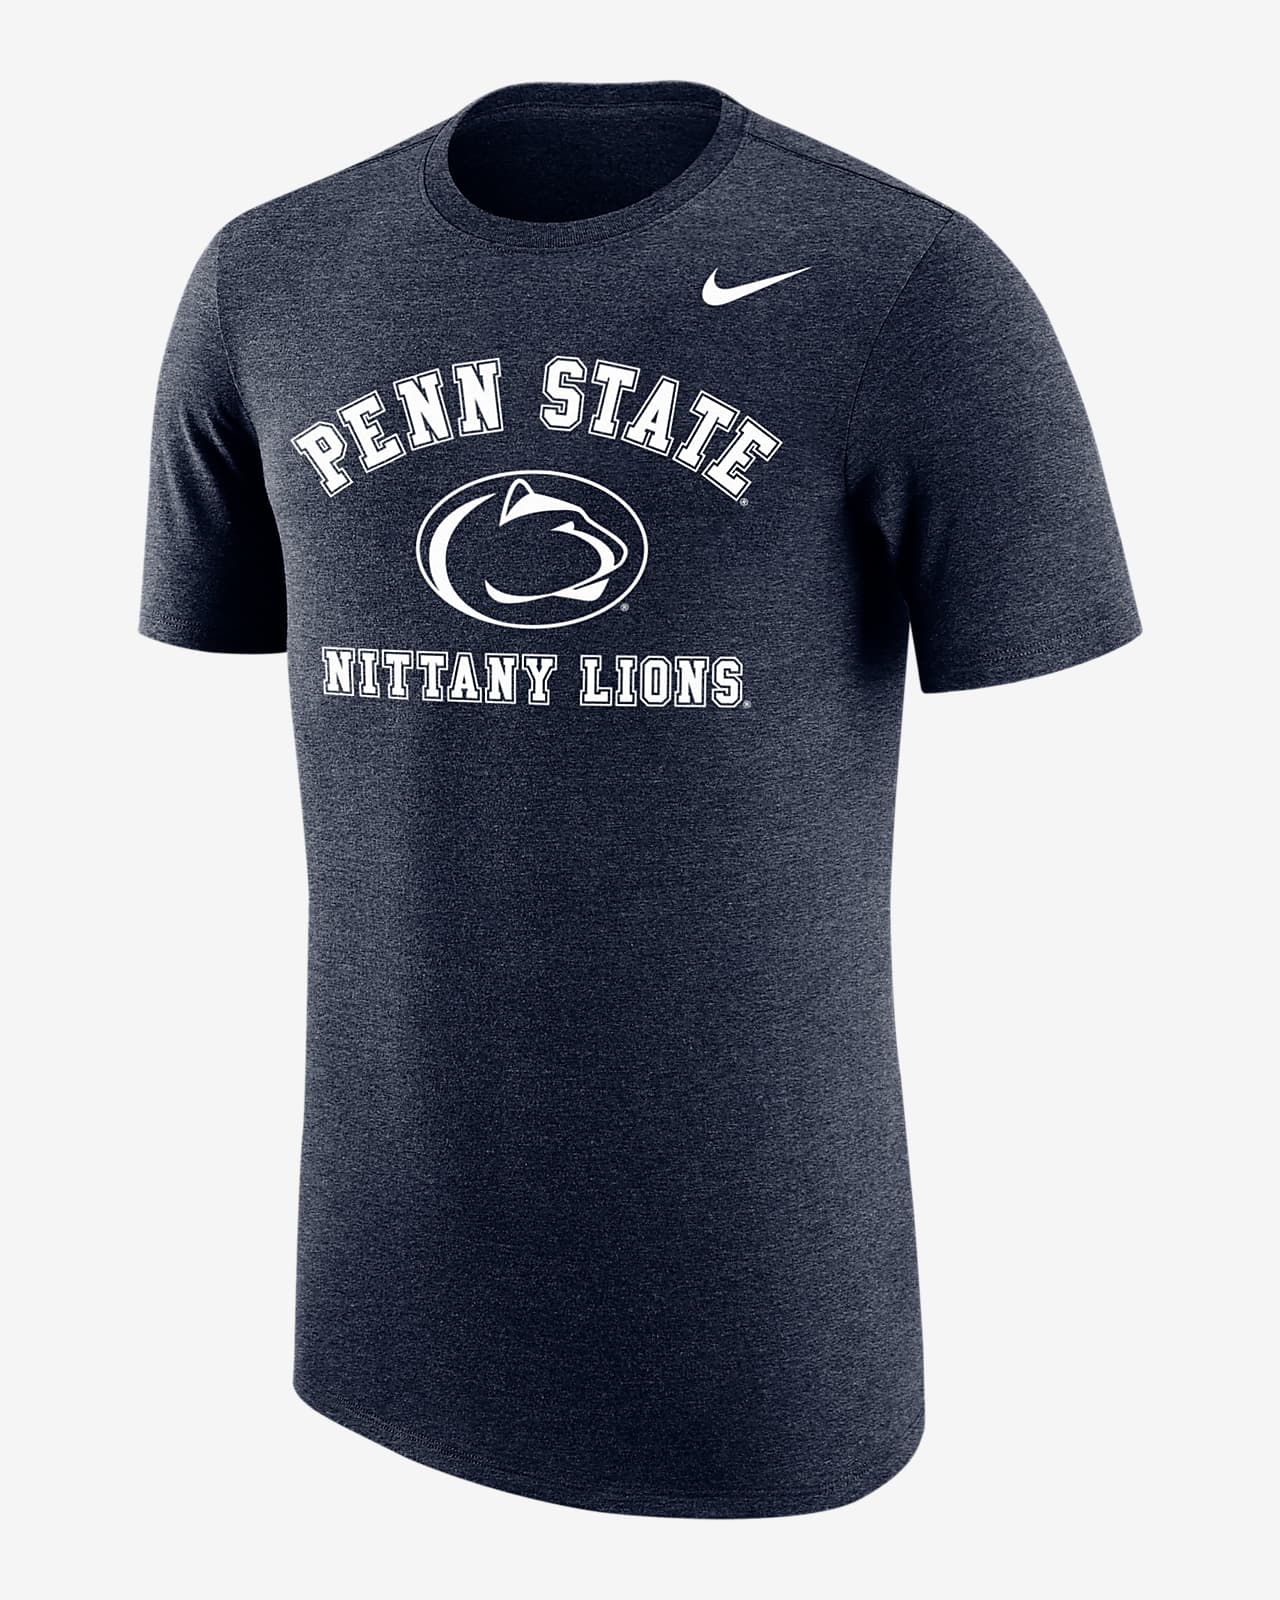 Penn State Men's Nike College T-Shirt